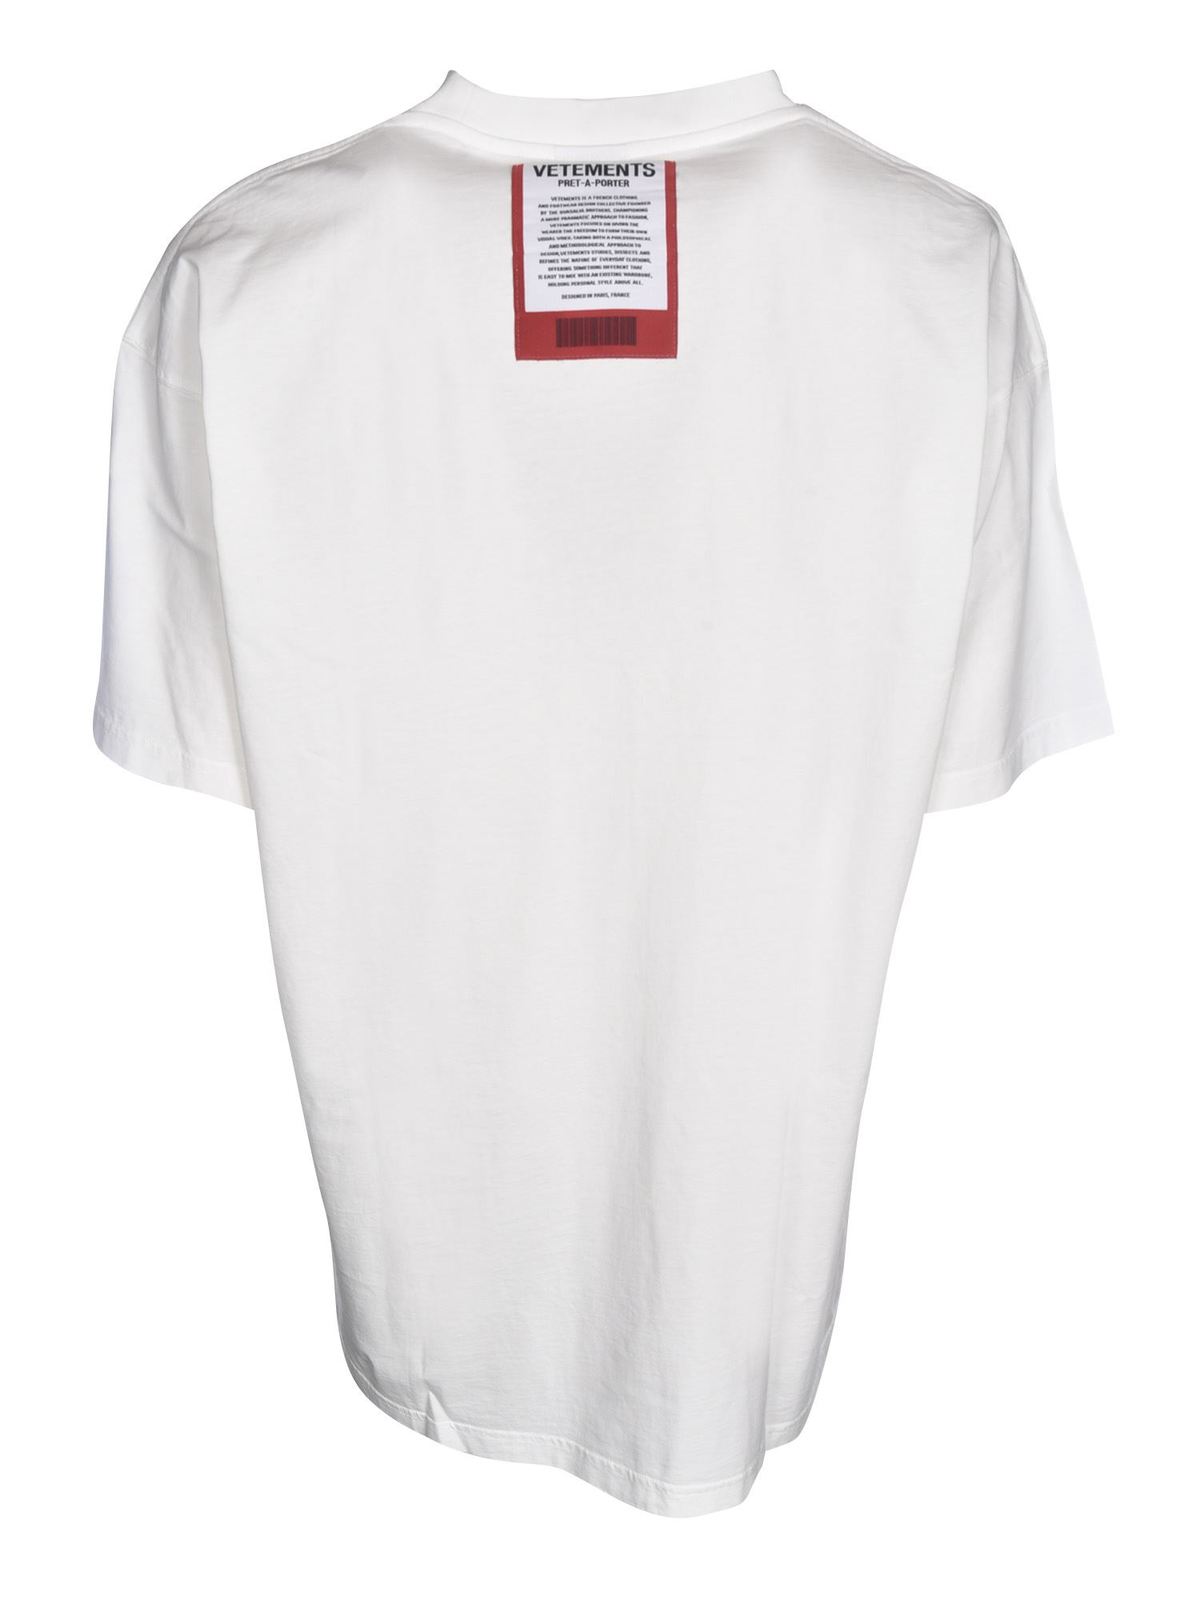 Tシャツ Vetements - Tシャツ - 白 - UE51TR540WWHITE | iKRIX.com